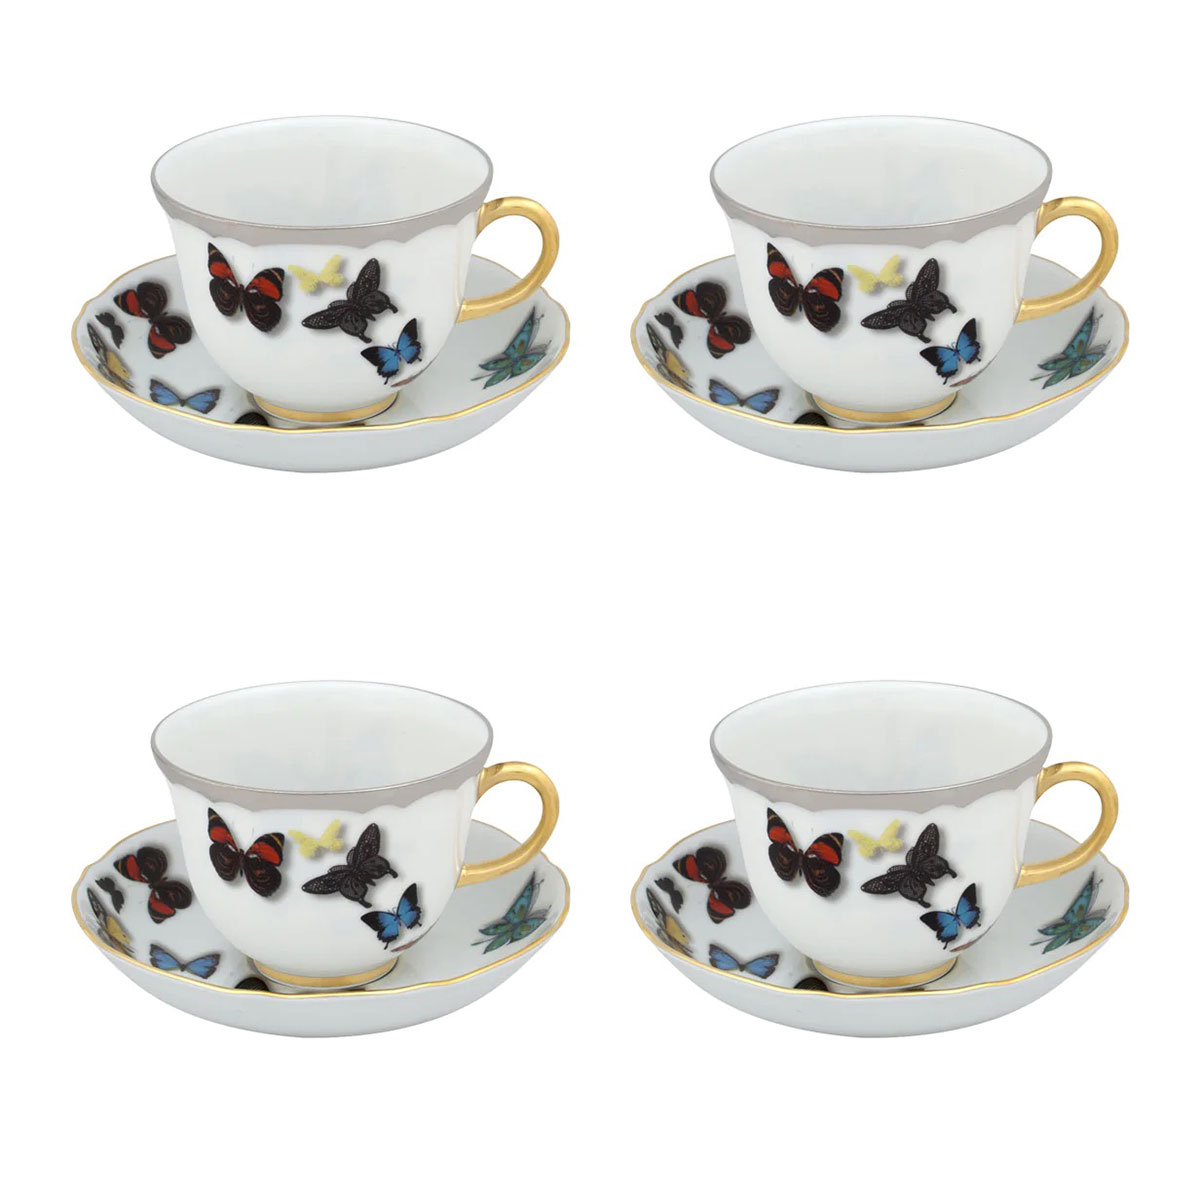 Vista Alegre Porcelain Christian Lacroix - Butterfly Parade Tea Cup And Saucer, Set of 4